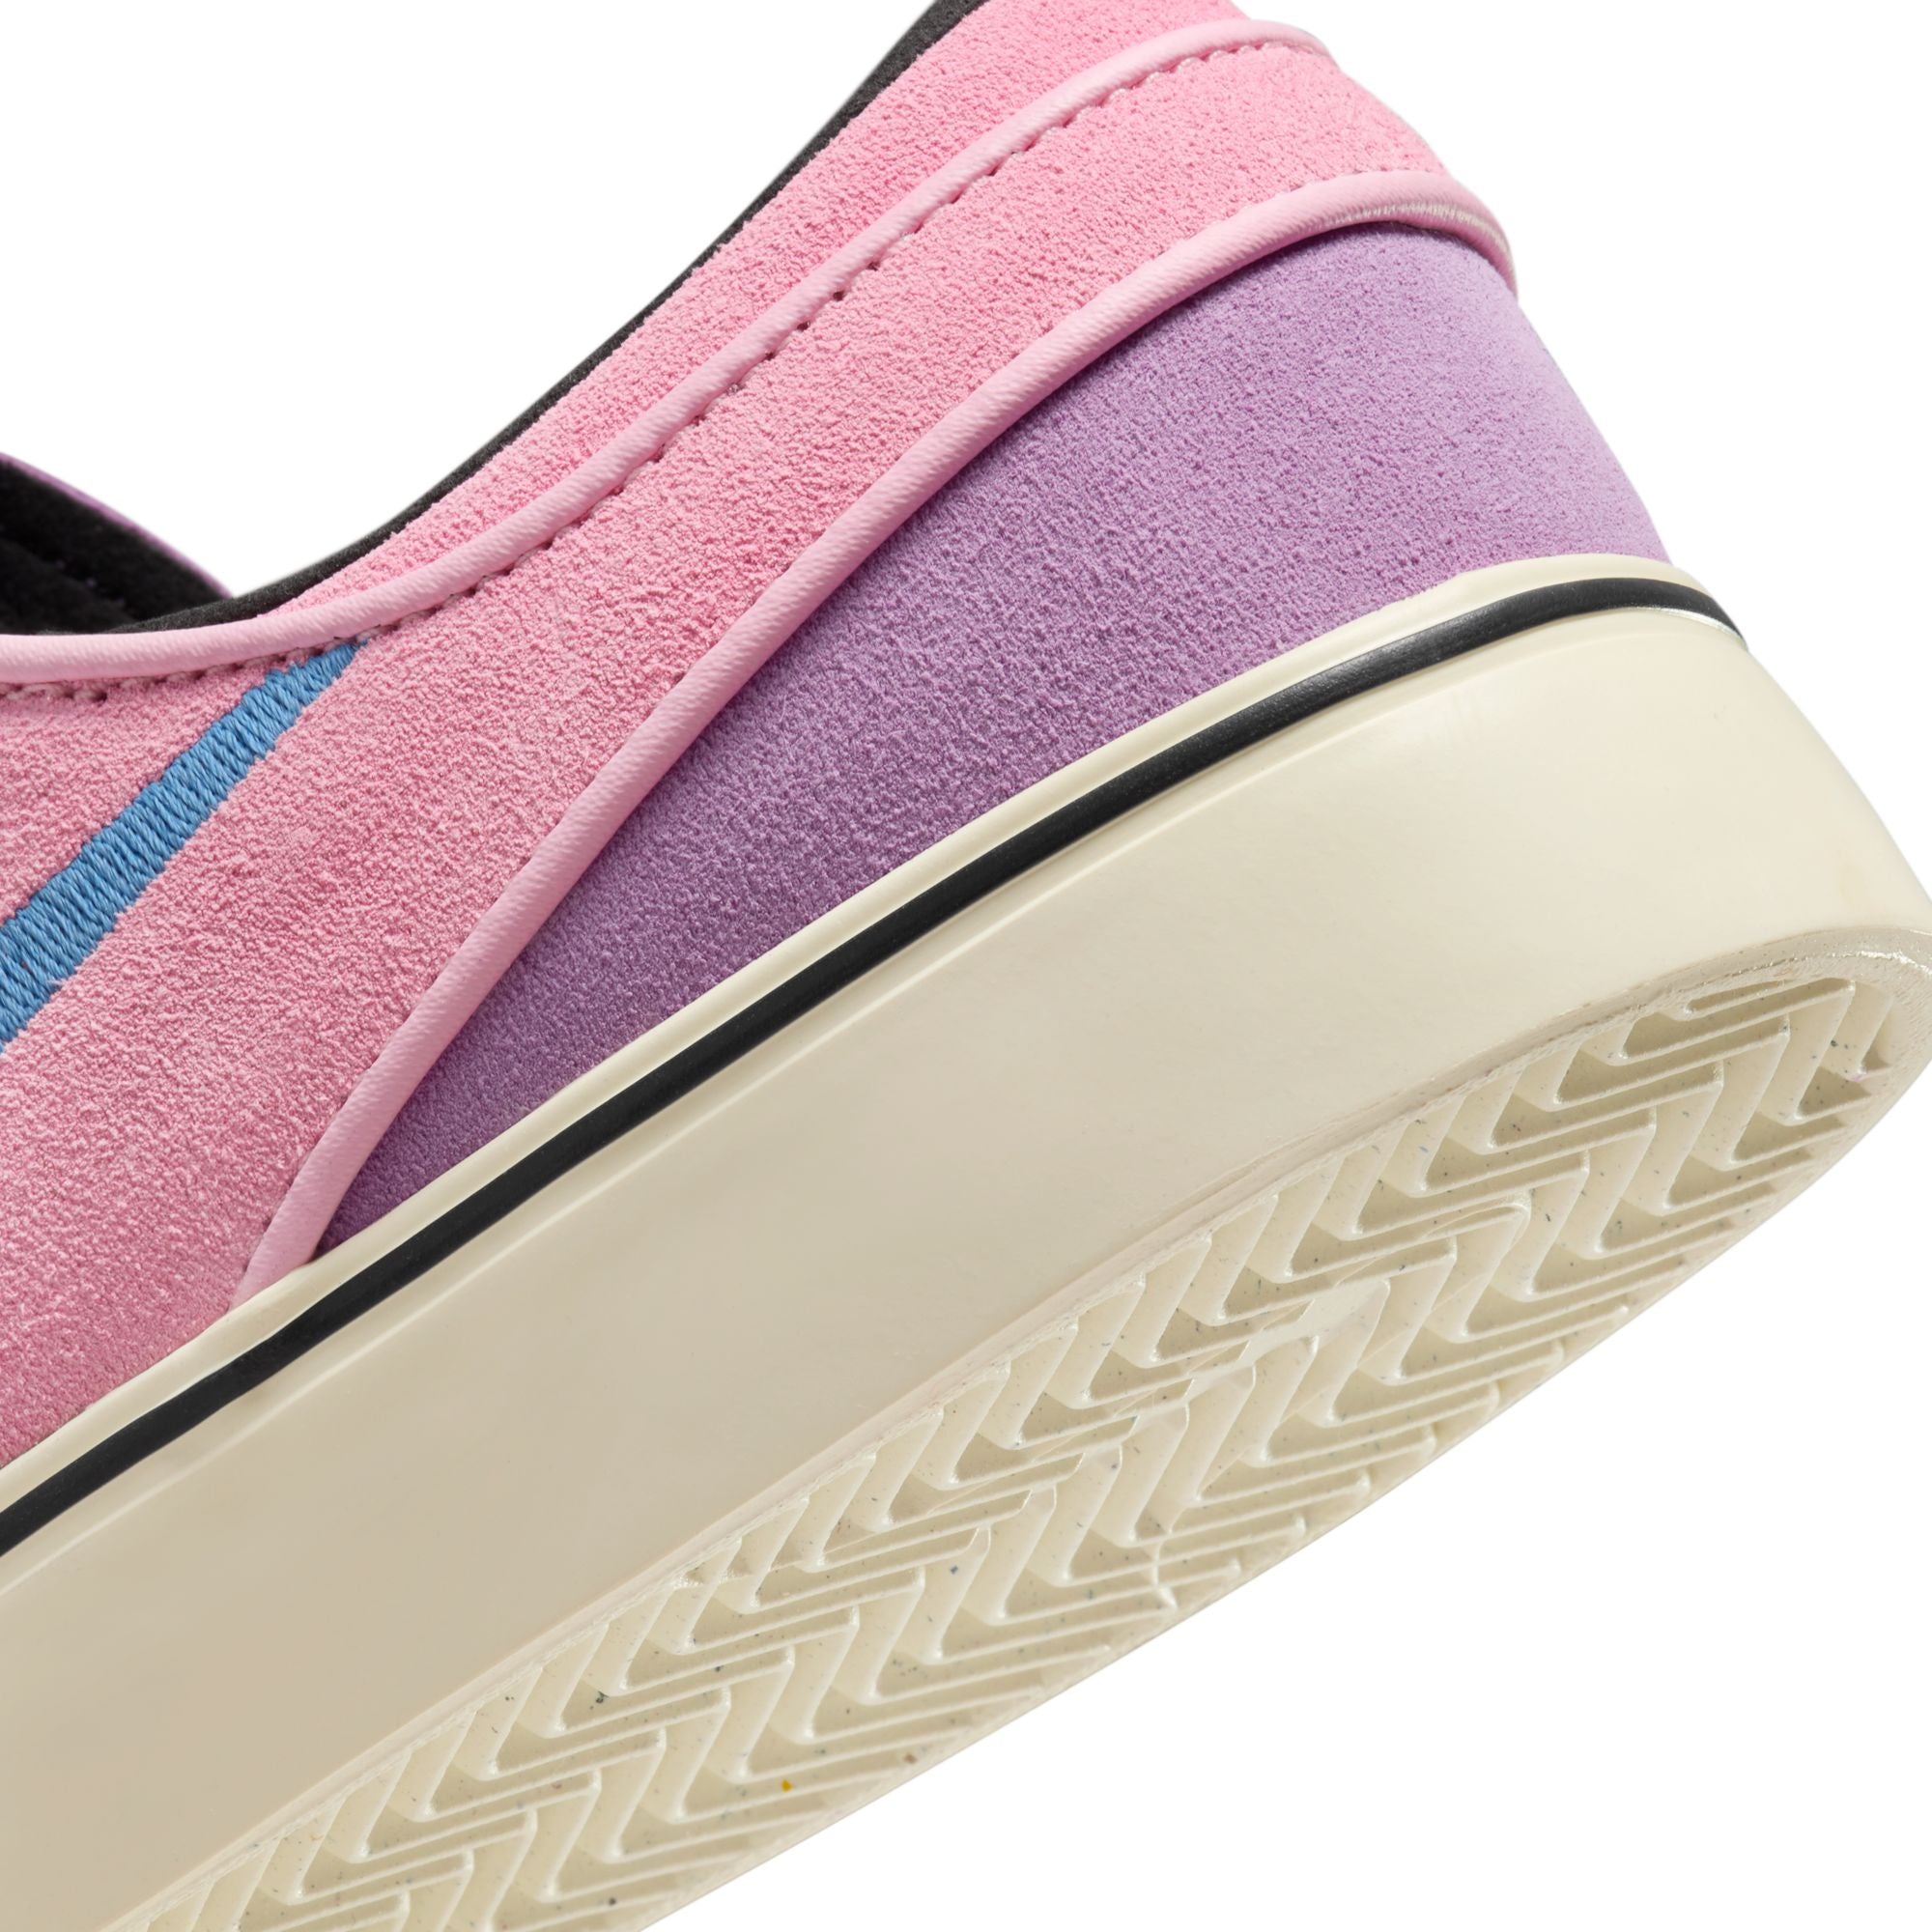 Nike SB Janoski OG+ Low Shoes - Lilac/Noise Aqua-Soft Pink